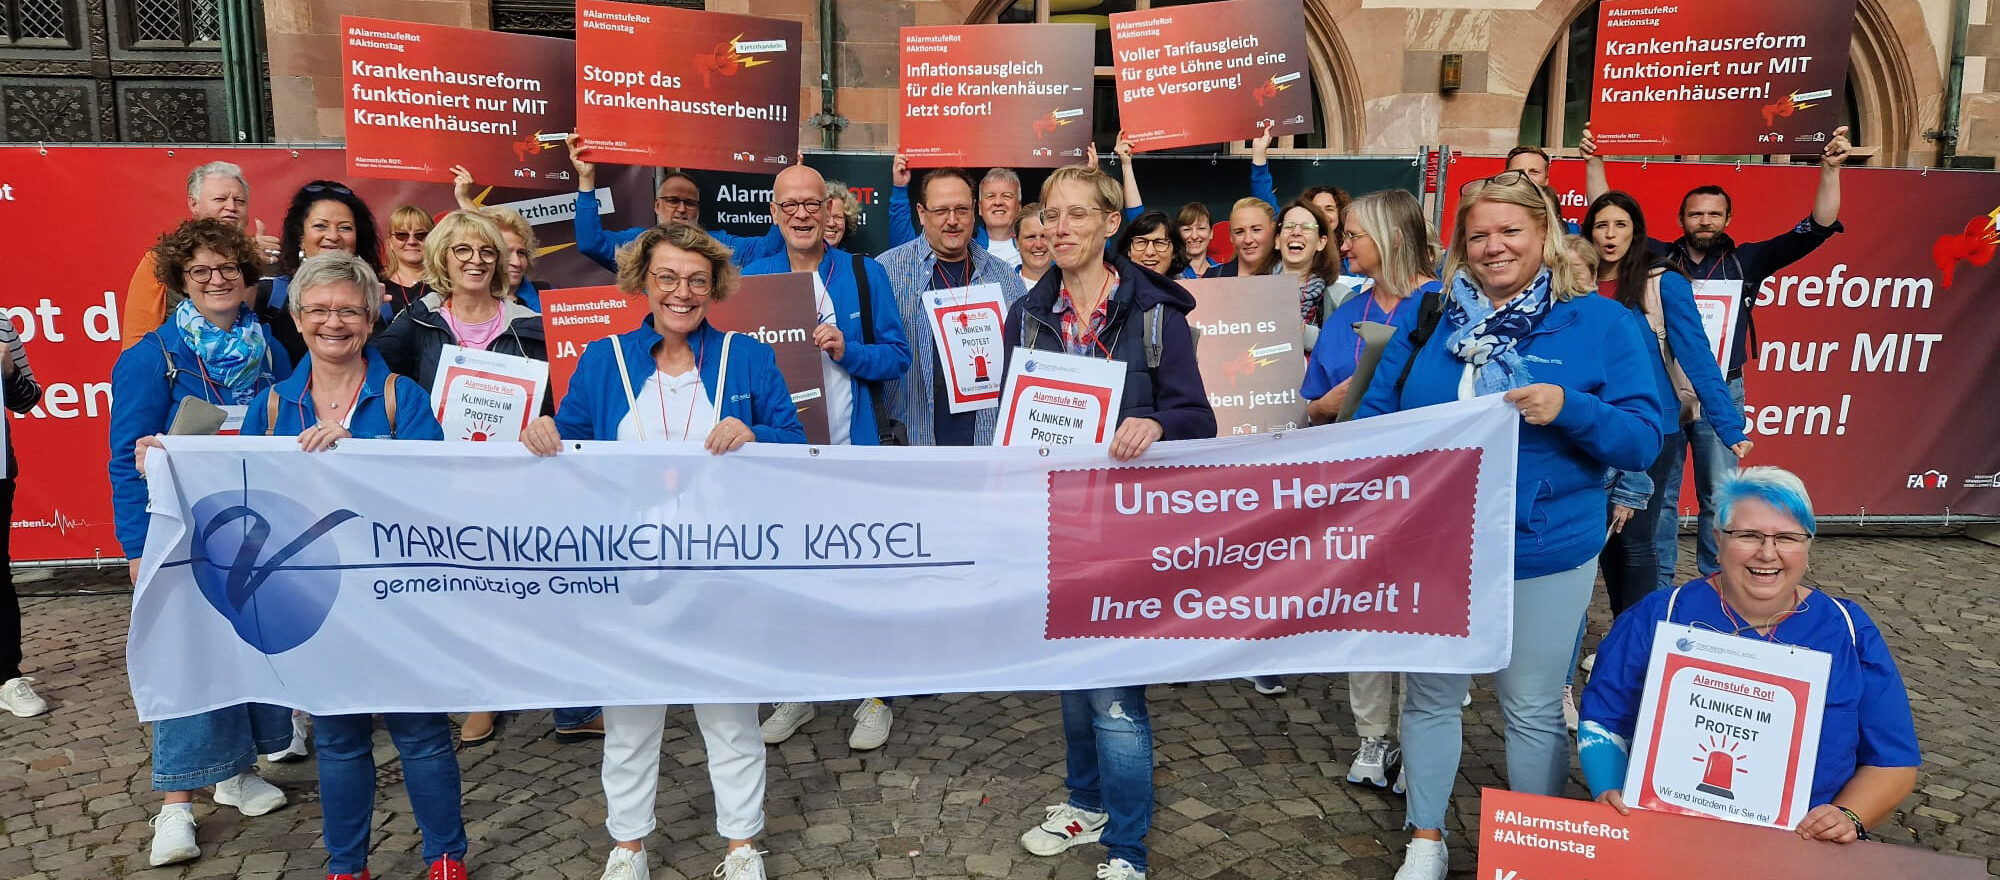 Alarmstufe Rot: Demo gegen „Krankenhaussterben“: Wir waren mit dabei! 